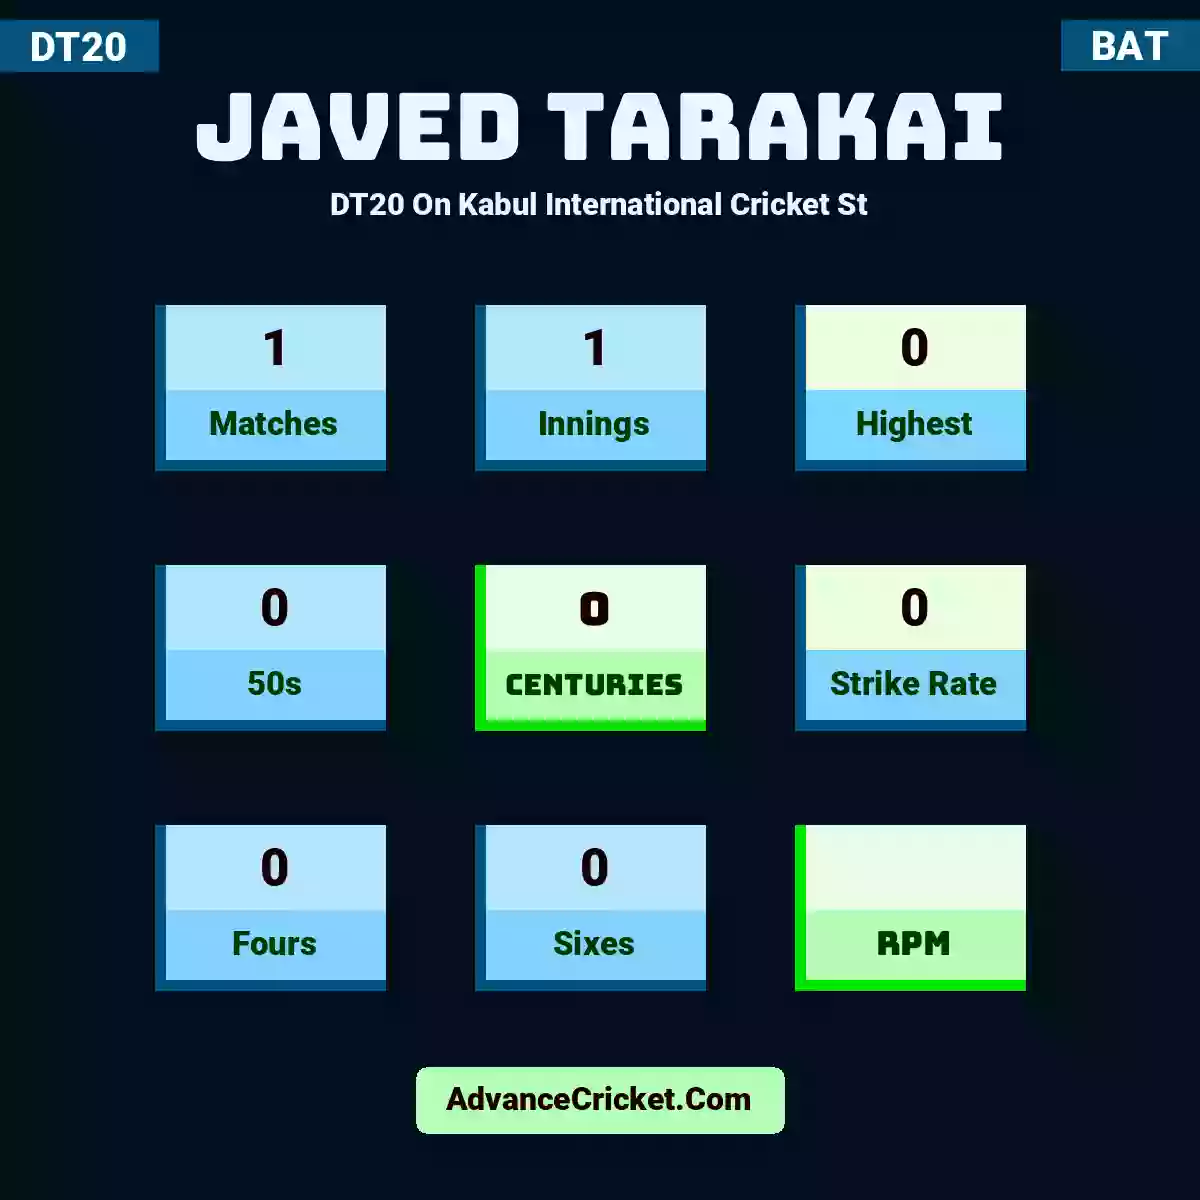 Javed Tarakai DT20  On Kabul International Cricket St, Javed Tarakai played 1 matches, scored 0 runs as highest, 0 half-centuries, and 0 centuries, with a strike rate of 0. J.Tarakai hit 0 fours and 0 sixes.